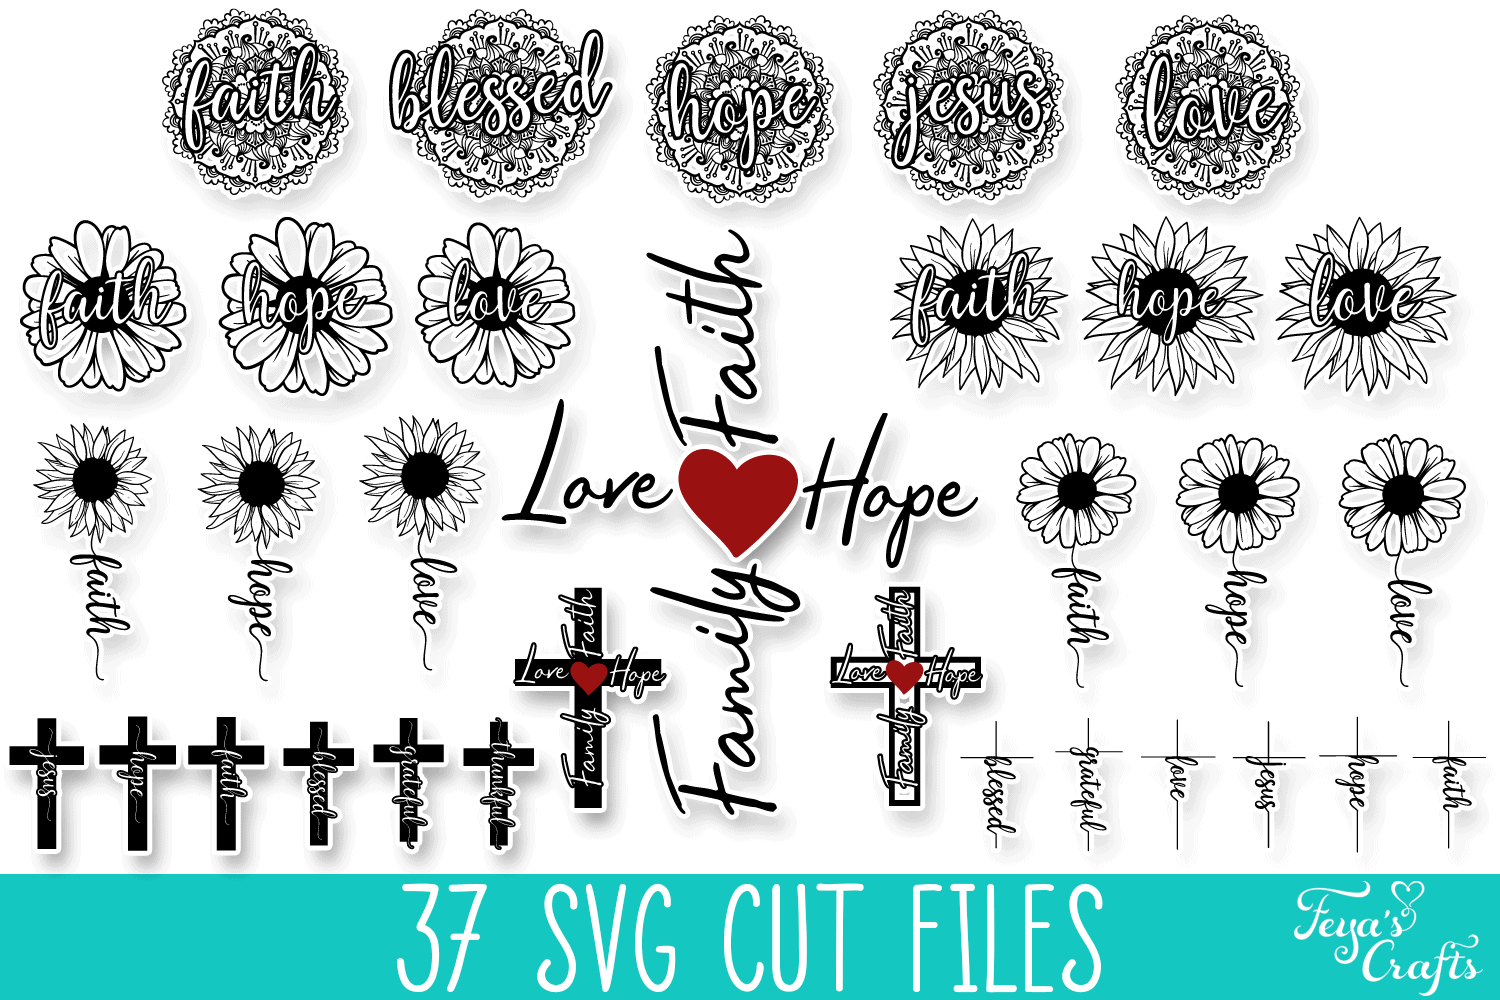 Feya’s All Shop Craft Bundle: 750+ SVG Cut Files & 57 Fonts - Only $19! 45